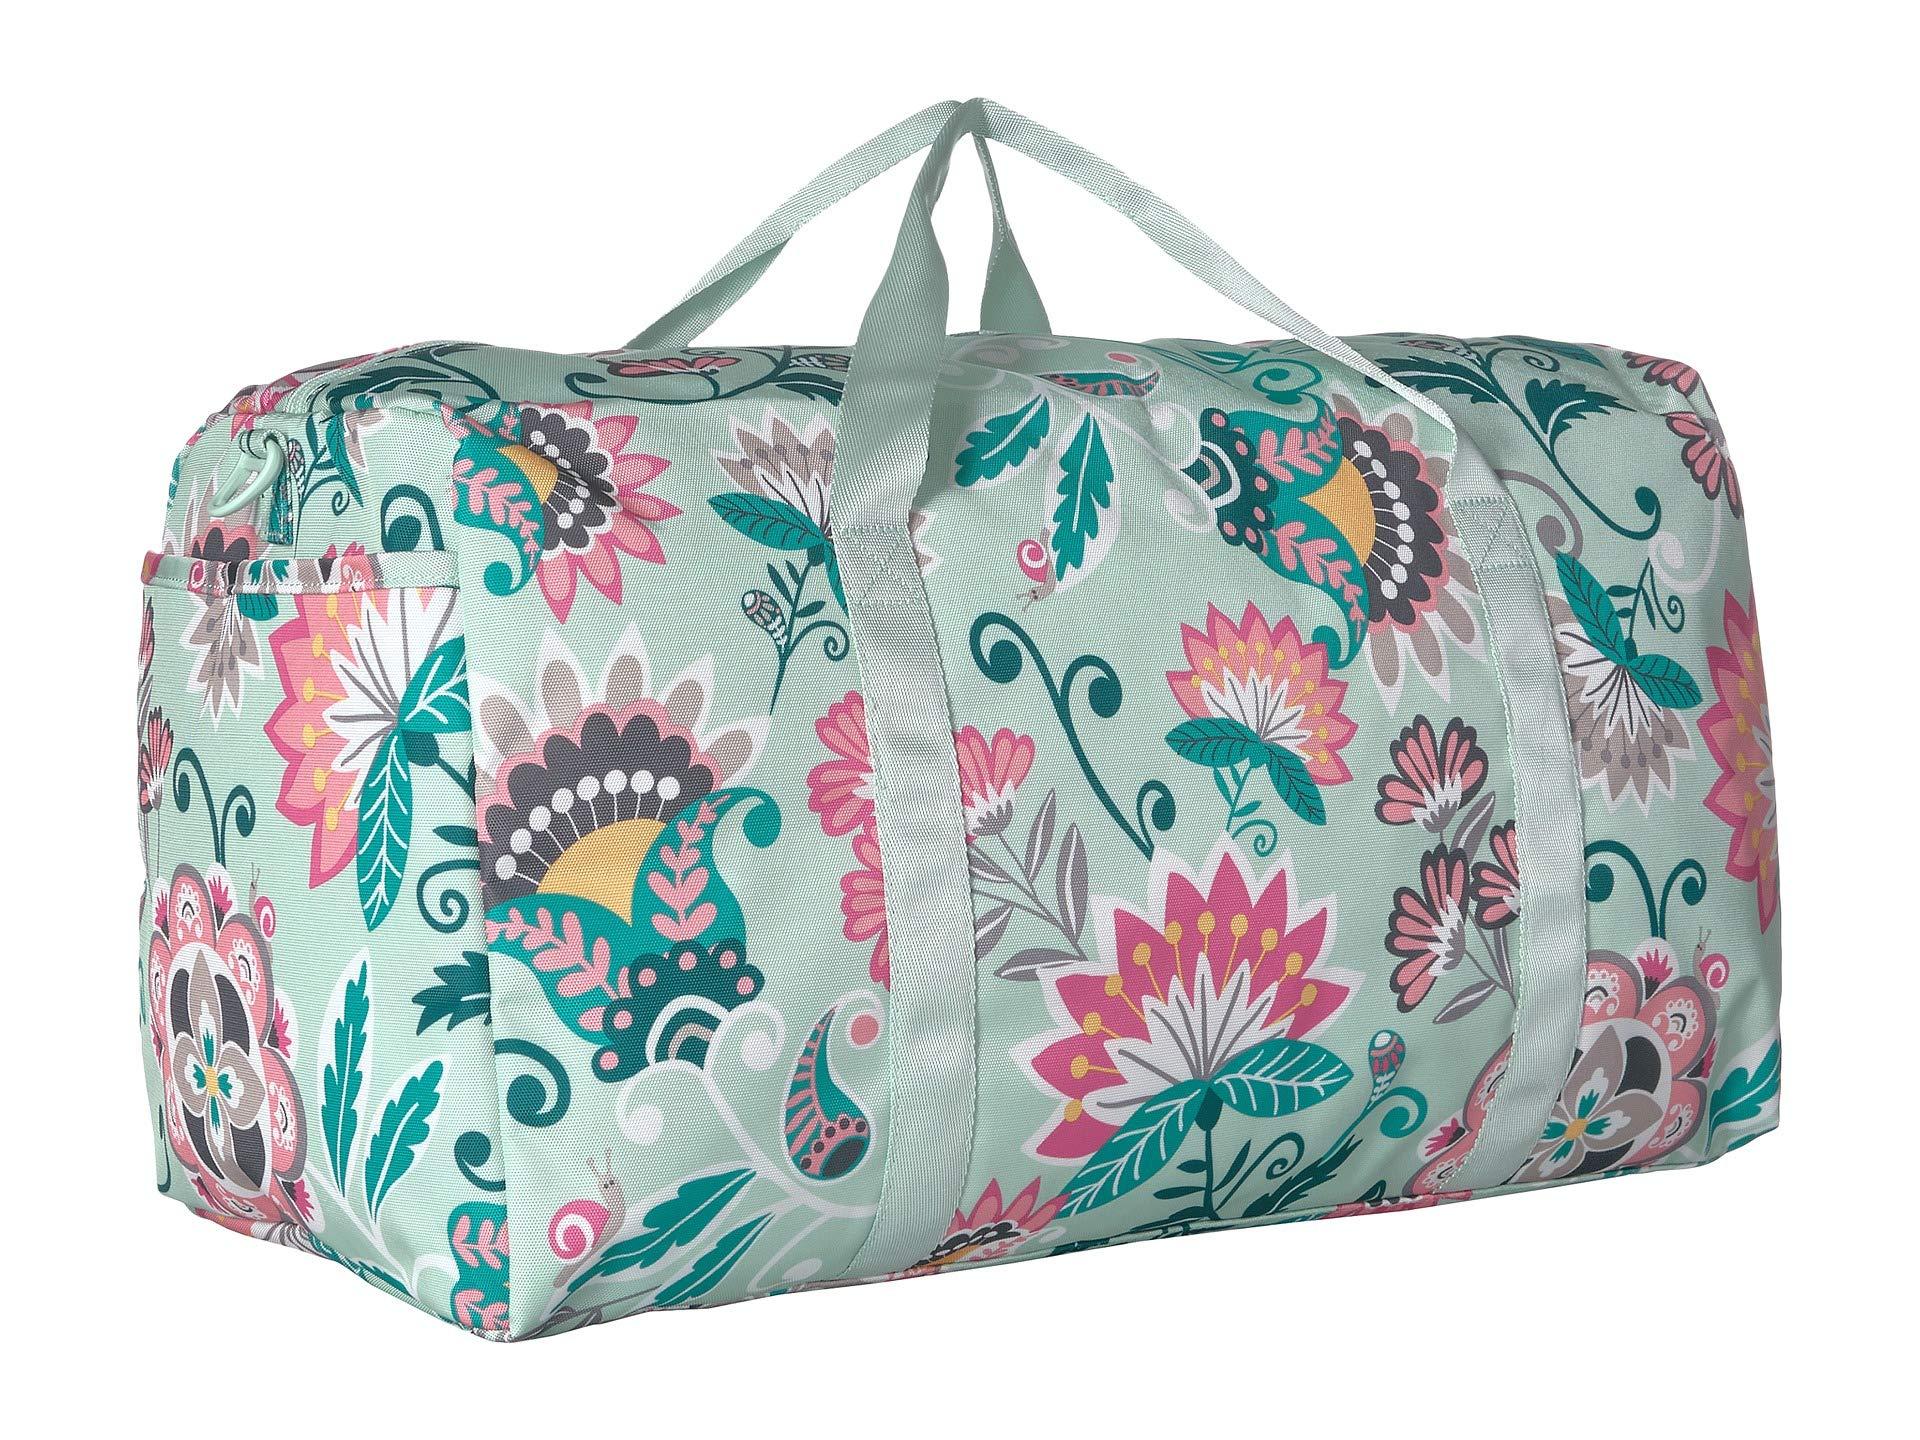 Vera Bradley Synthetic Lighten Up Large Travel Duffel Bag Bag in Mint Flowers (Green) - Lyst